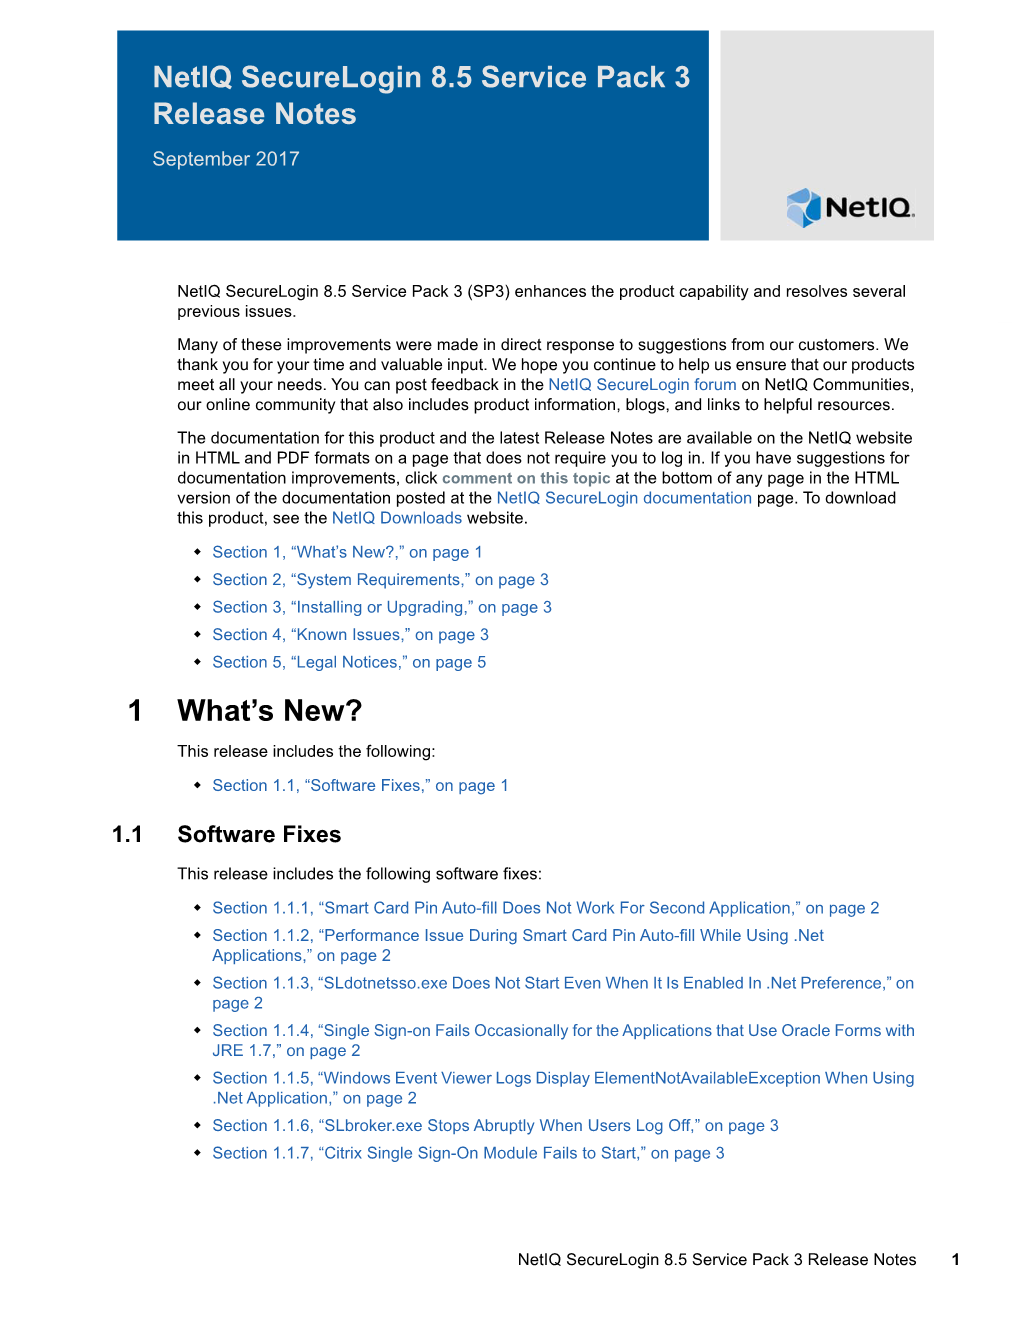 Netiq Securelogin 8.5 Service Pack 3 Release Notes September 2017